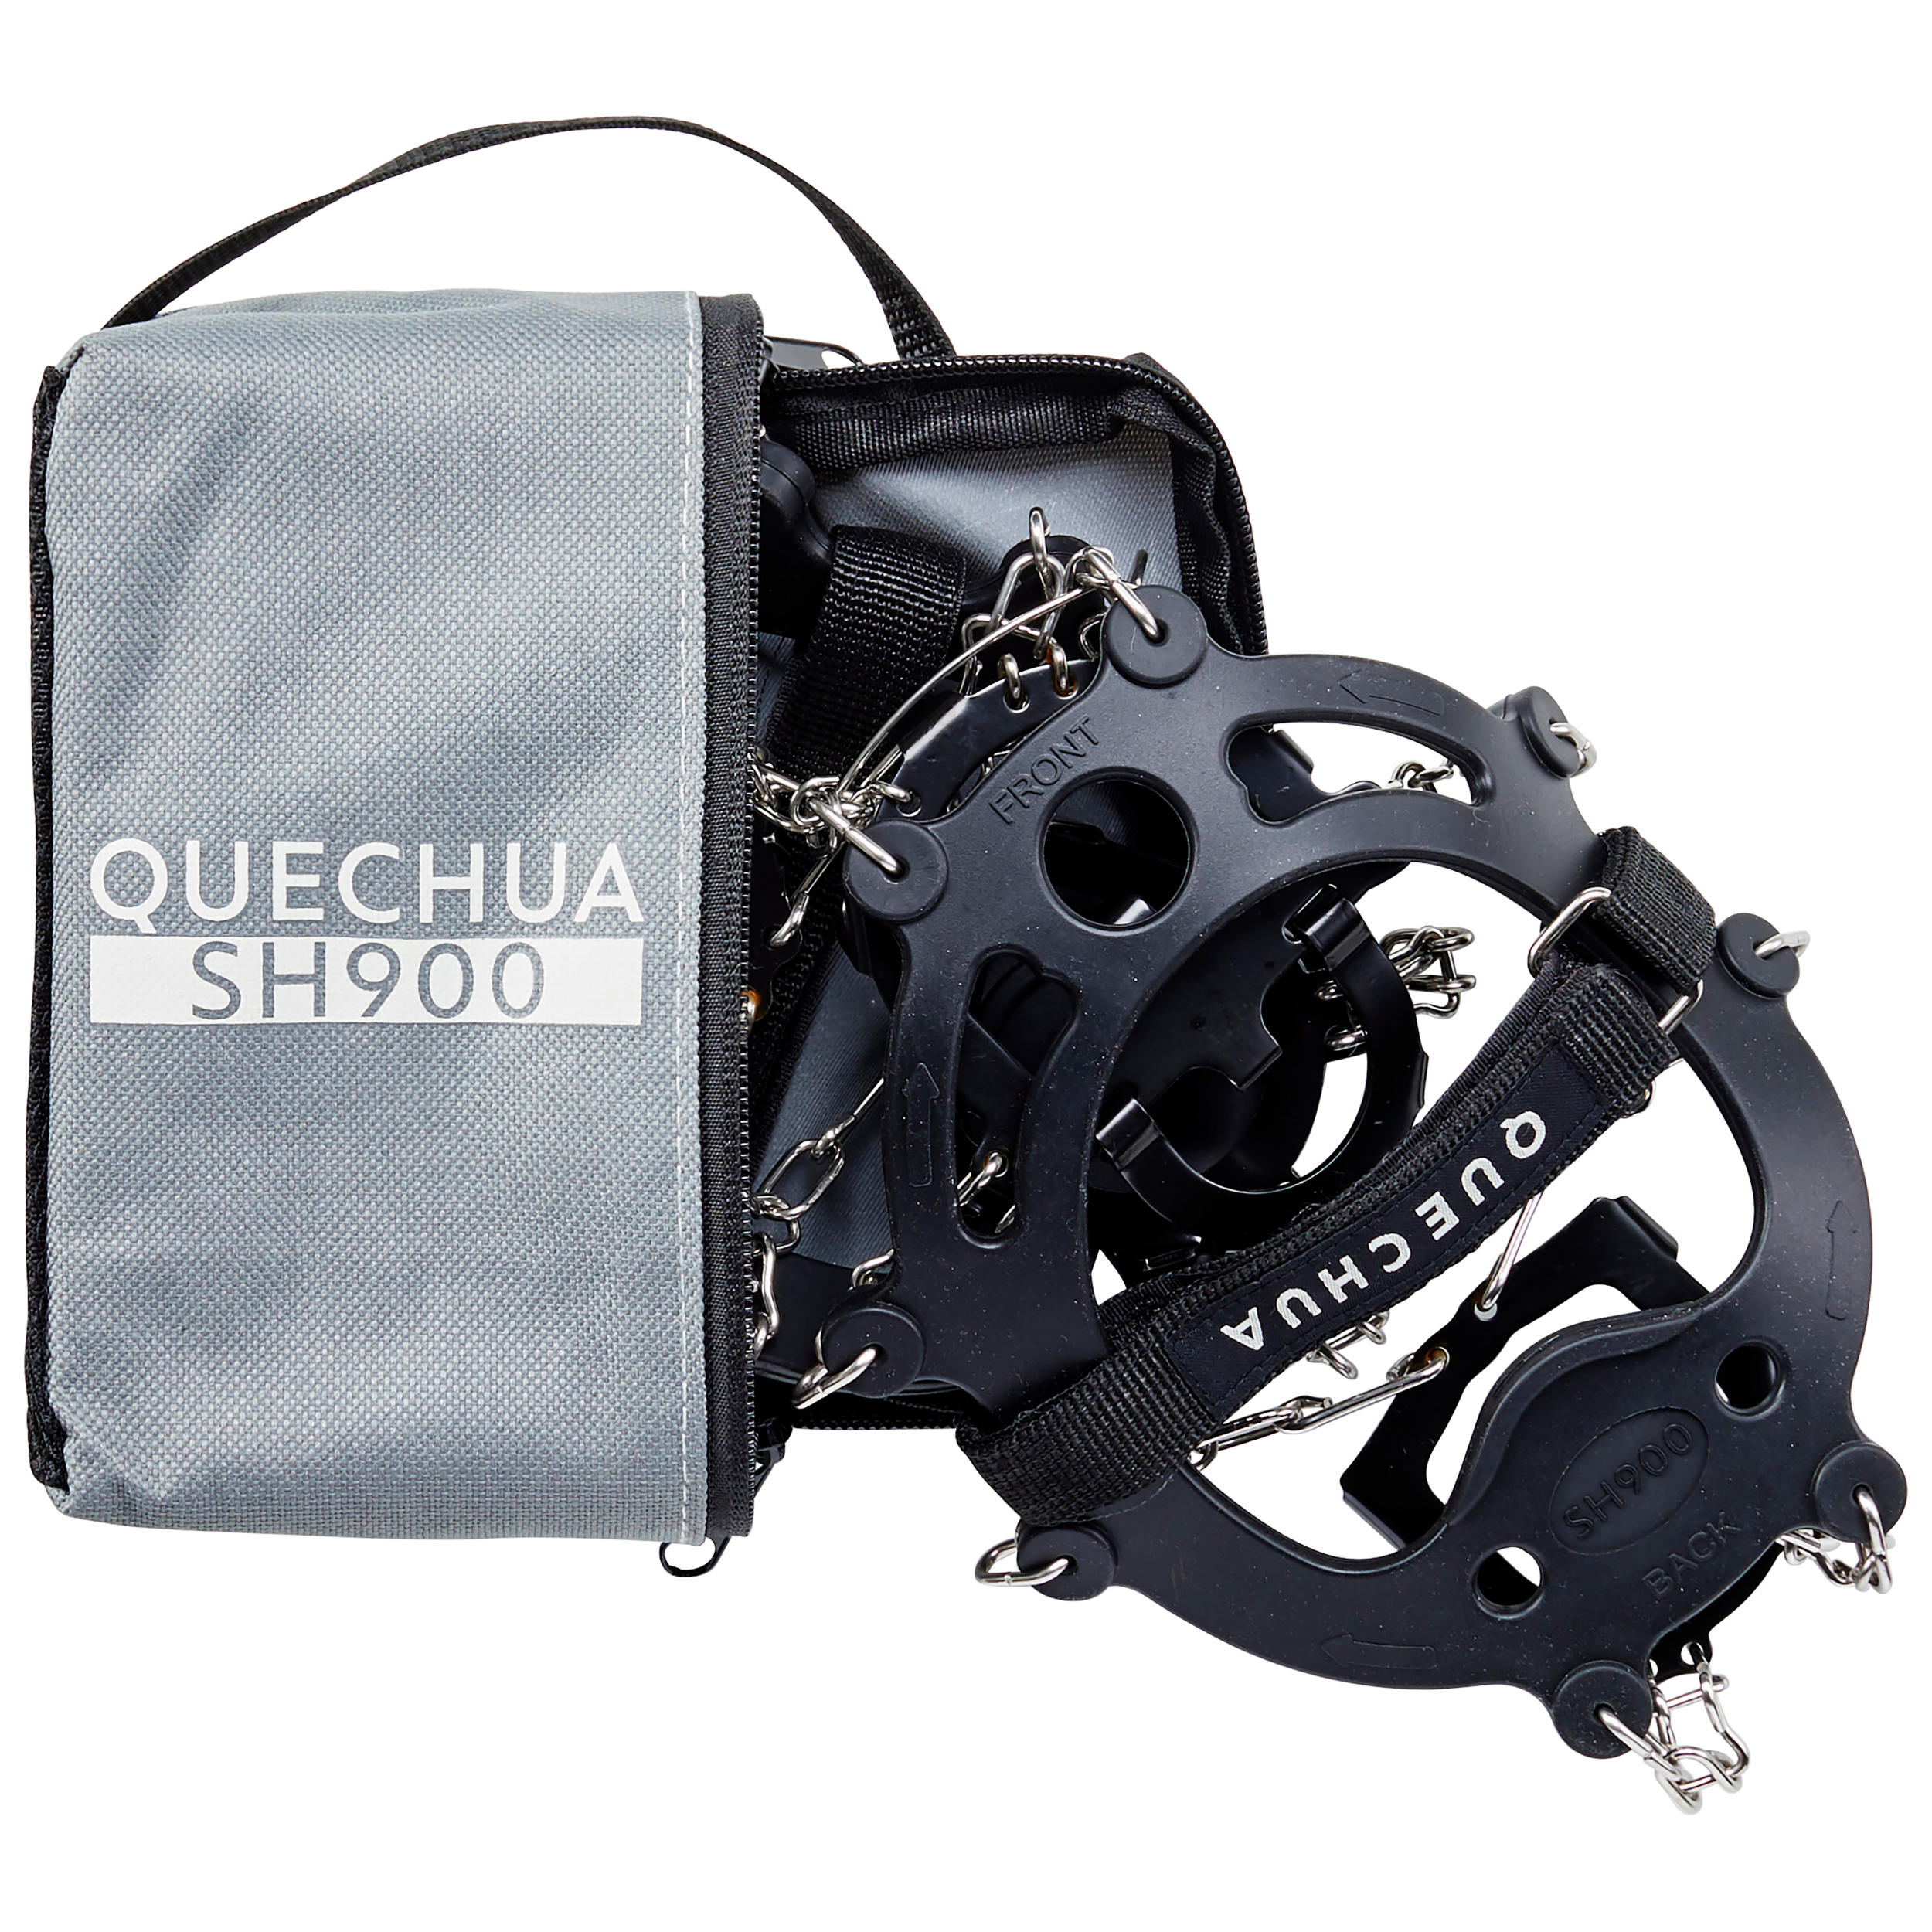 Winter Crampons - SH 900 - QUECHUA